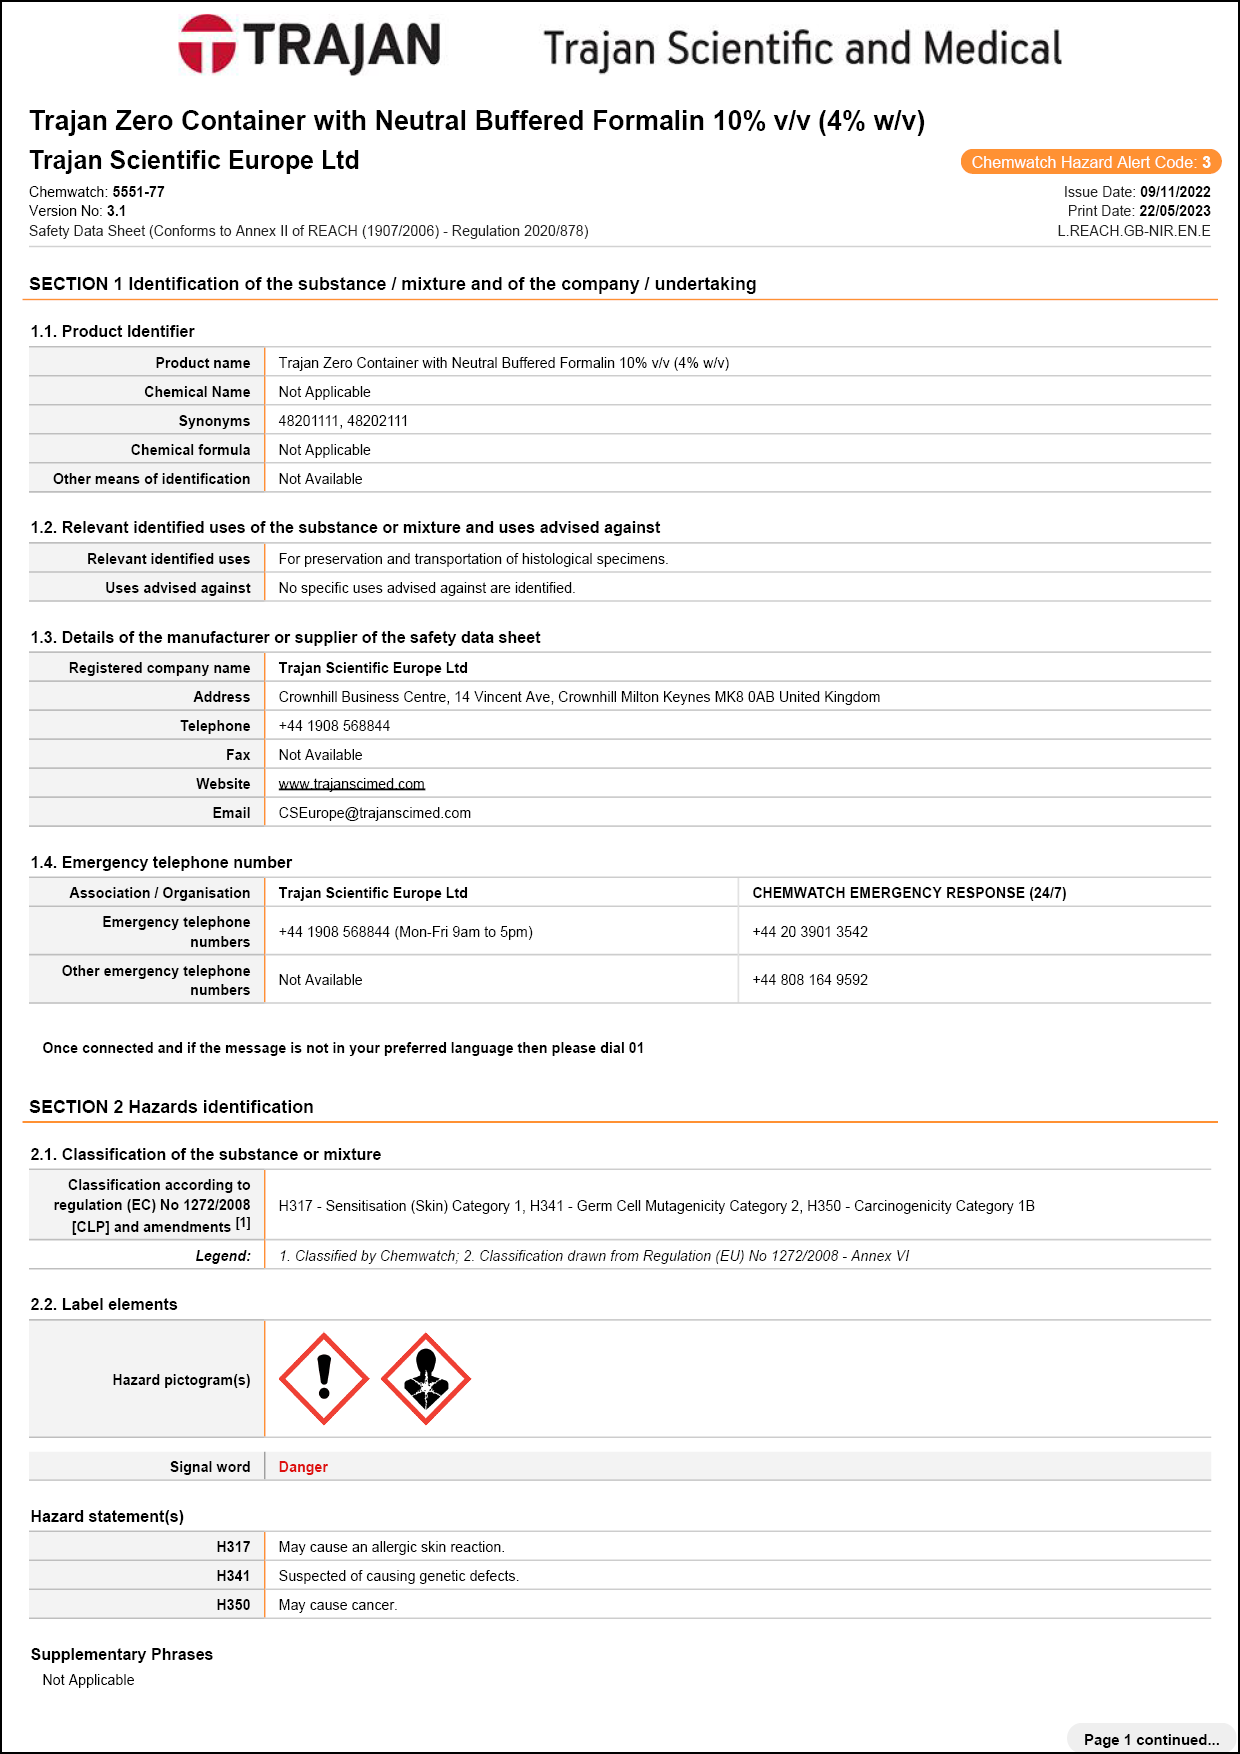 Safety Data Sheet - Trajan Zero Container with Neutral Buffered Formalin 10% v/v (4% w/v) (UK)